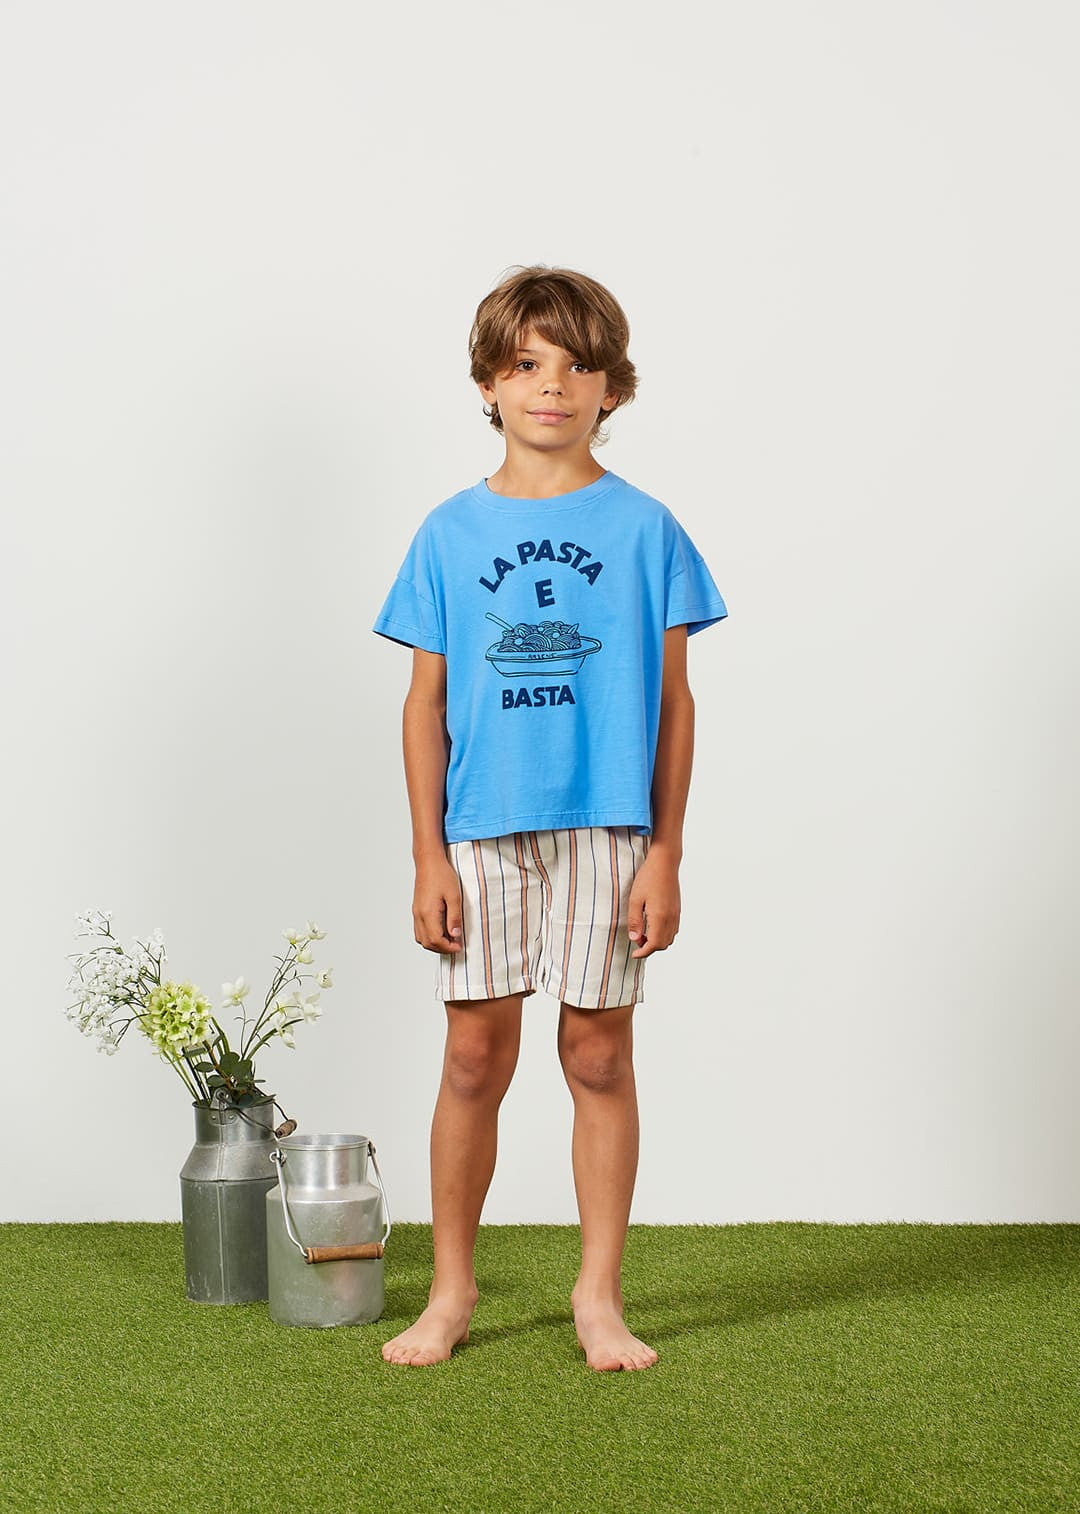 Shorts Boy Stripe Blue Franz - قميص